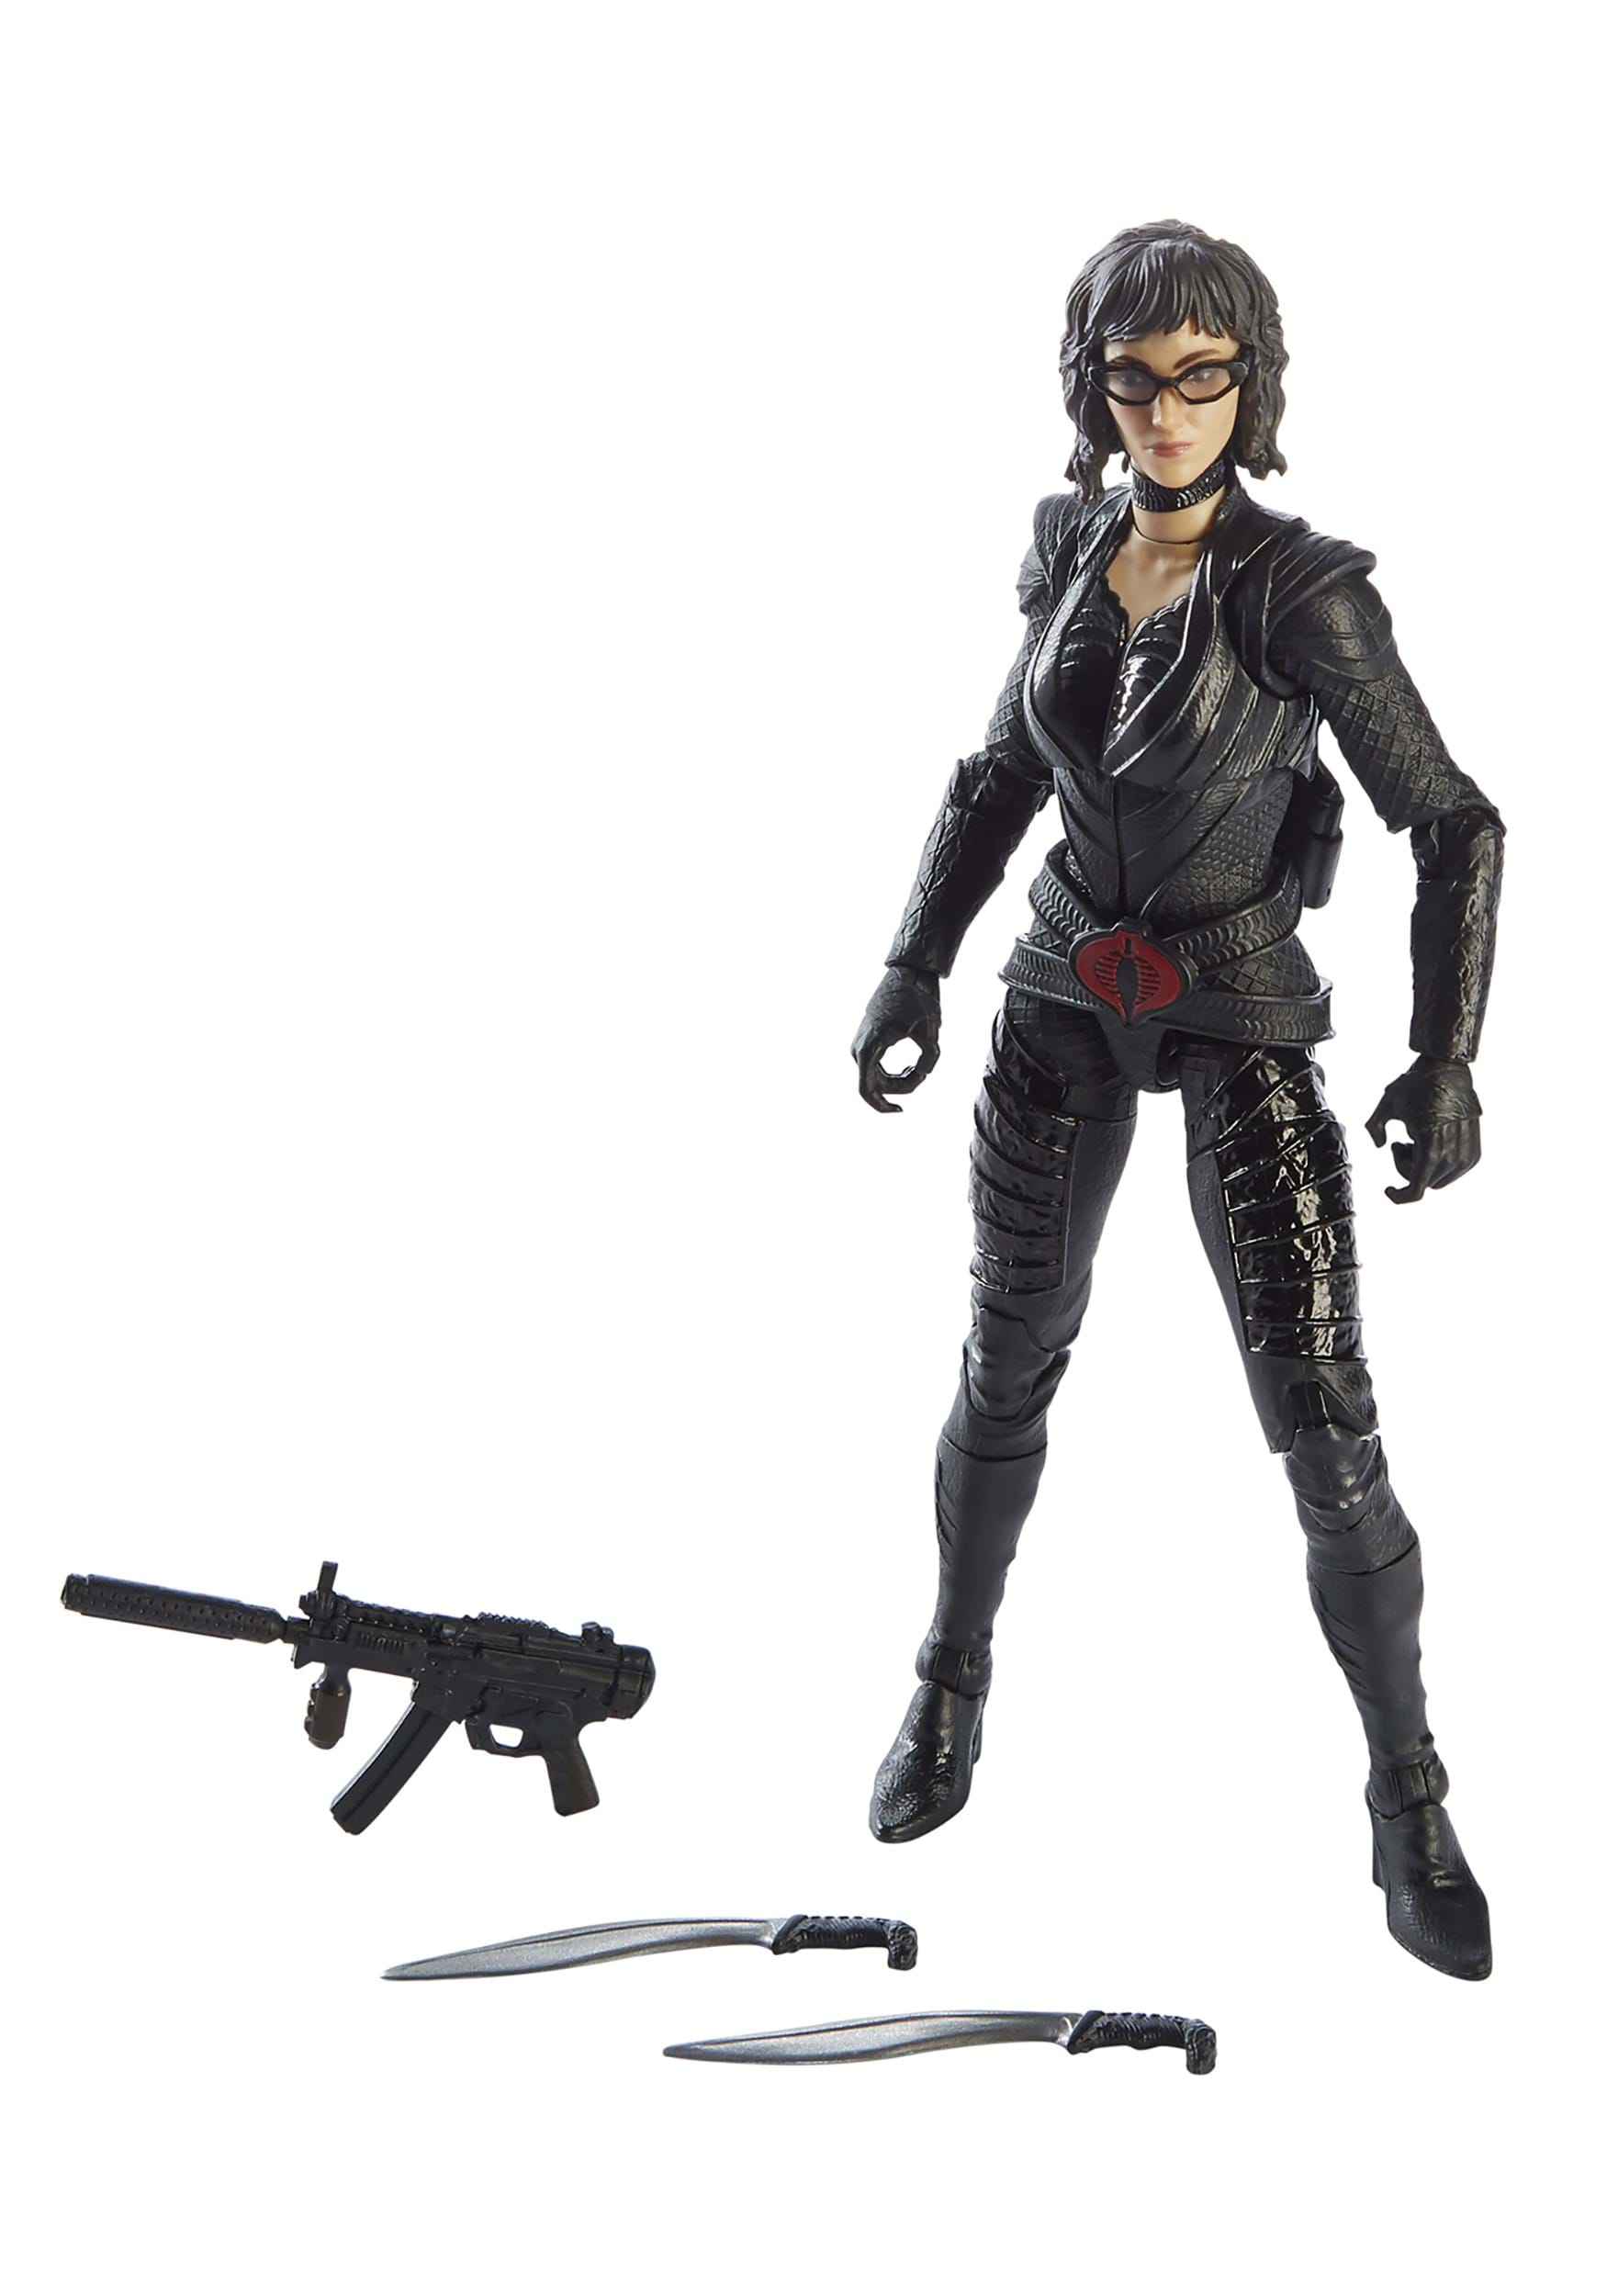 G.I. Joe Classified Series 6-Inch Snake Eyes: G.I. Joe Origins Baroness Action Figure